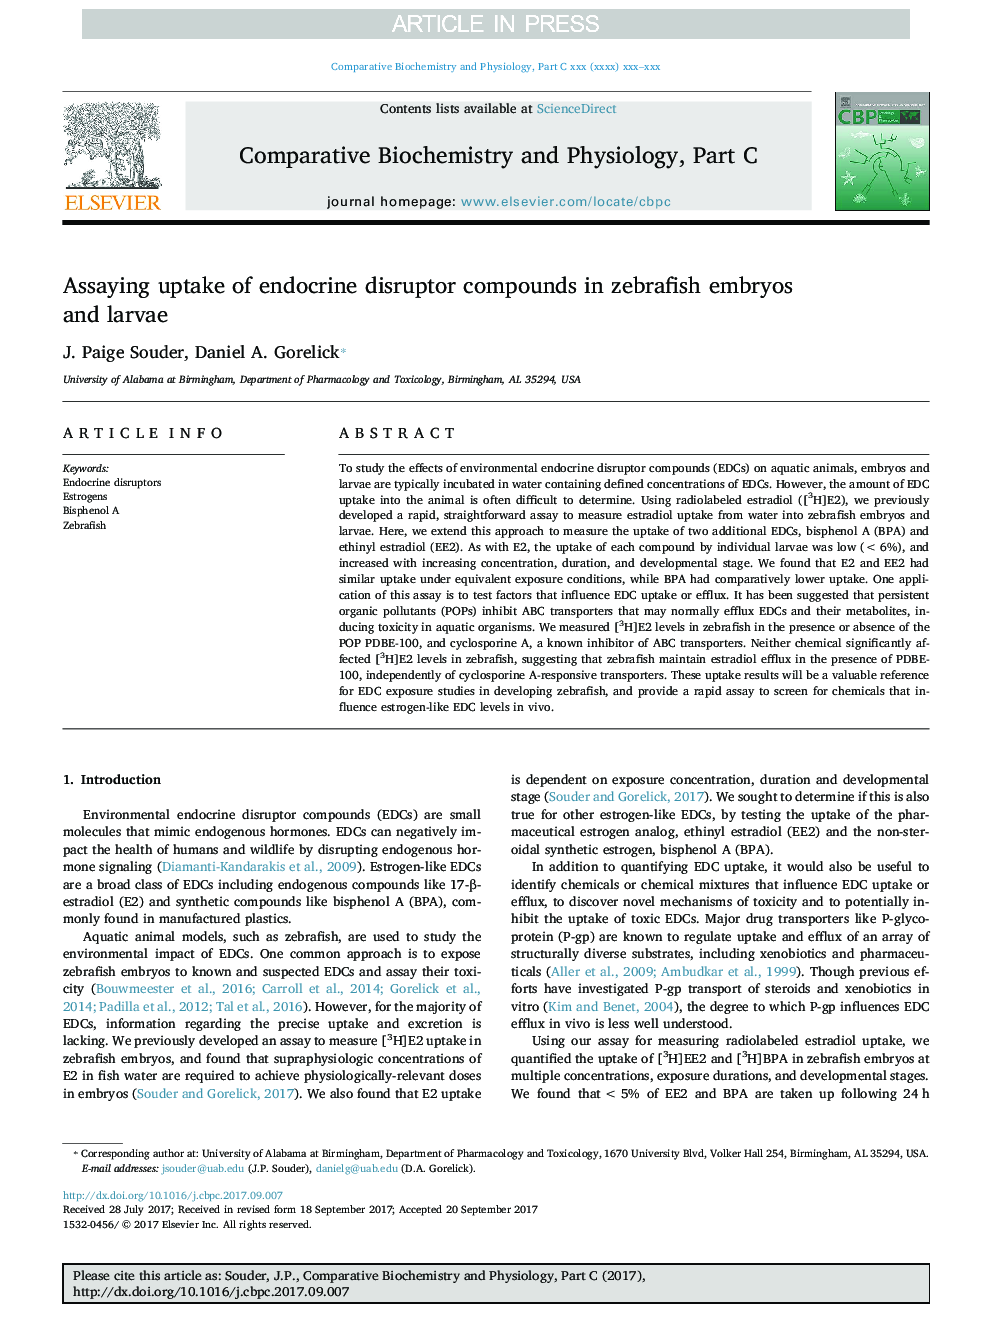 Assaying uptake of endocrine disruptor compounds in zebrafish embryos and larvae